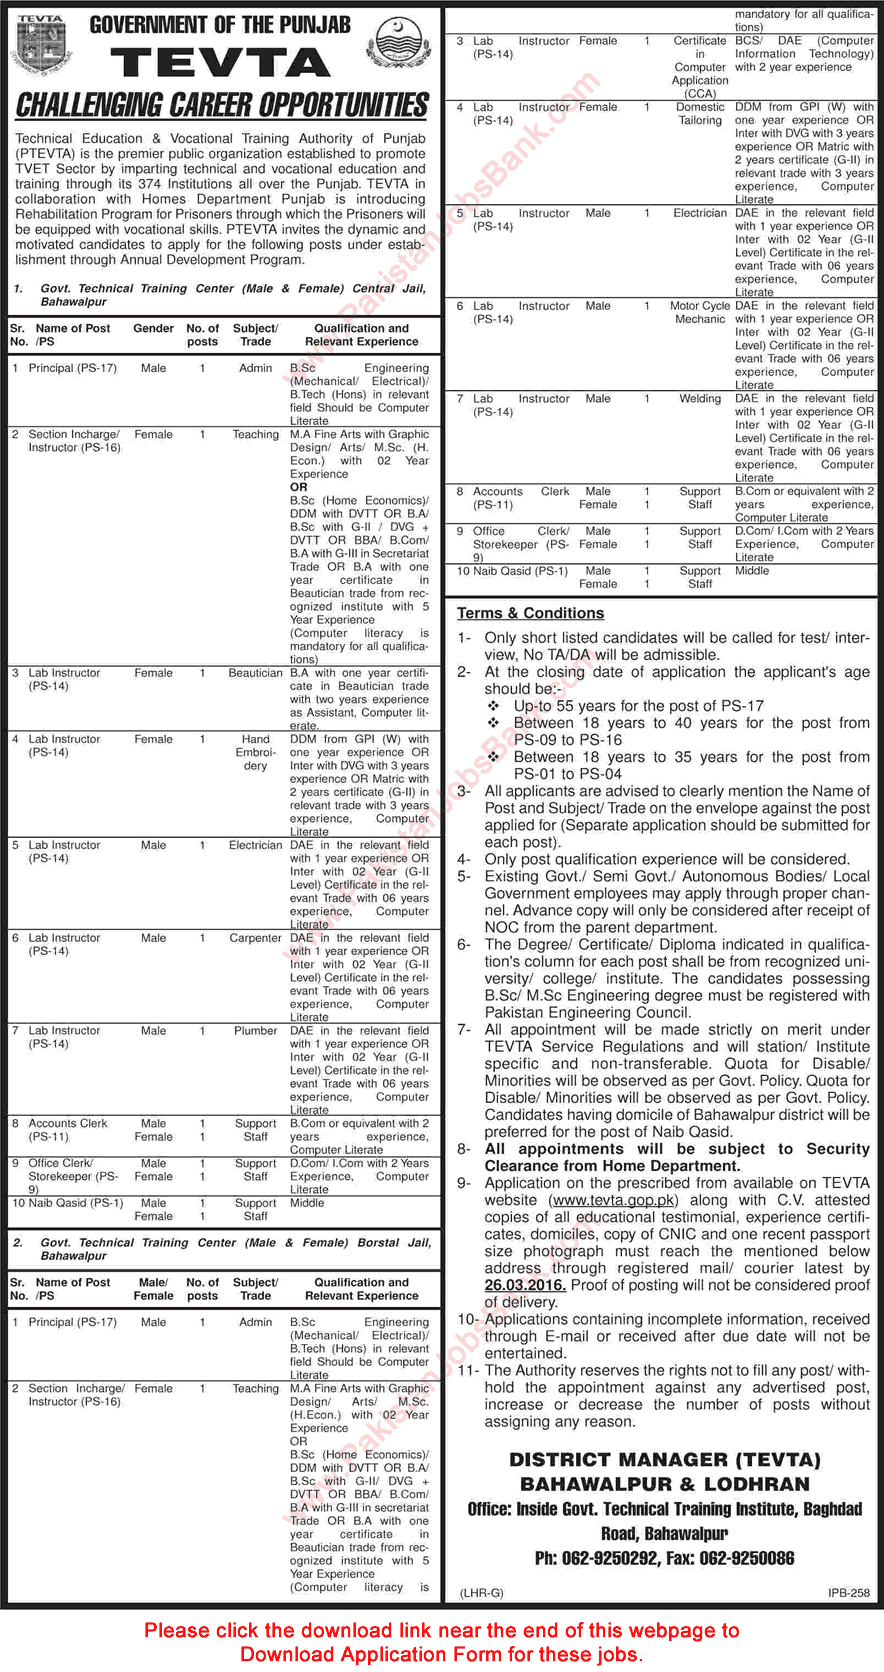 TEVTA Jobs March 2016 Bahawalpur Punjab Application Form at Government Technical Training Centers Latest